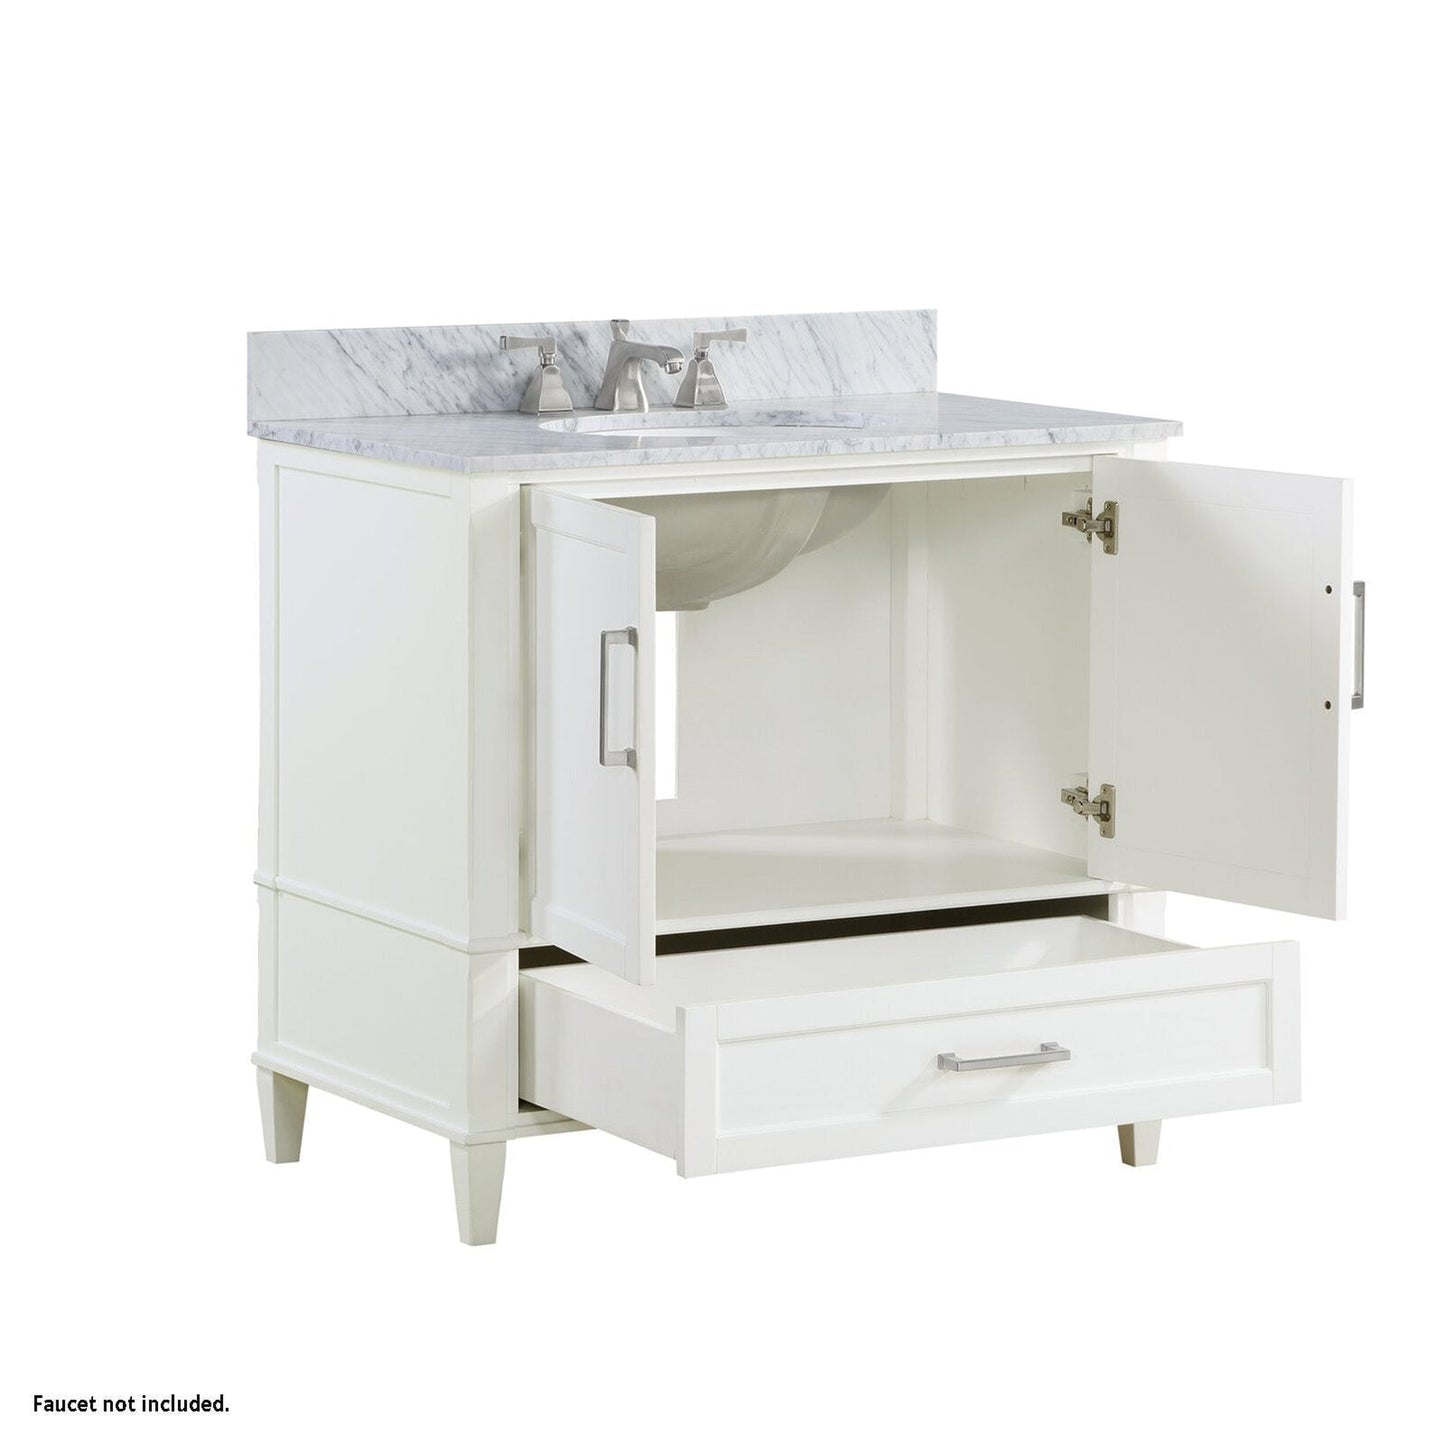 Bemma Design Montauk 36" Pure White Solid Wood Freestanding Bathroom Vanity With Single 3-Hole Italian Carra Marble Vanity Top, Oval Undermount Sink, and Backsplash